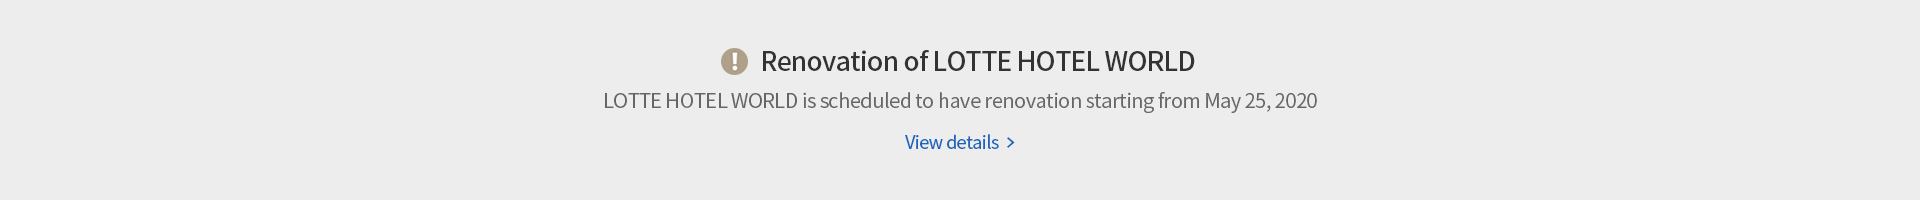 LOTTE HOTEL WORLD, Notice